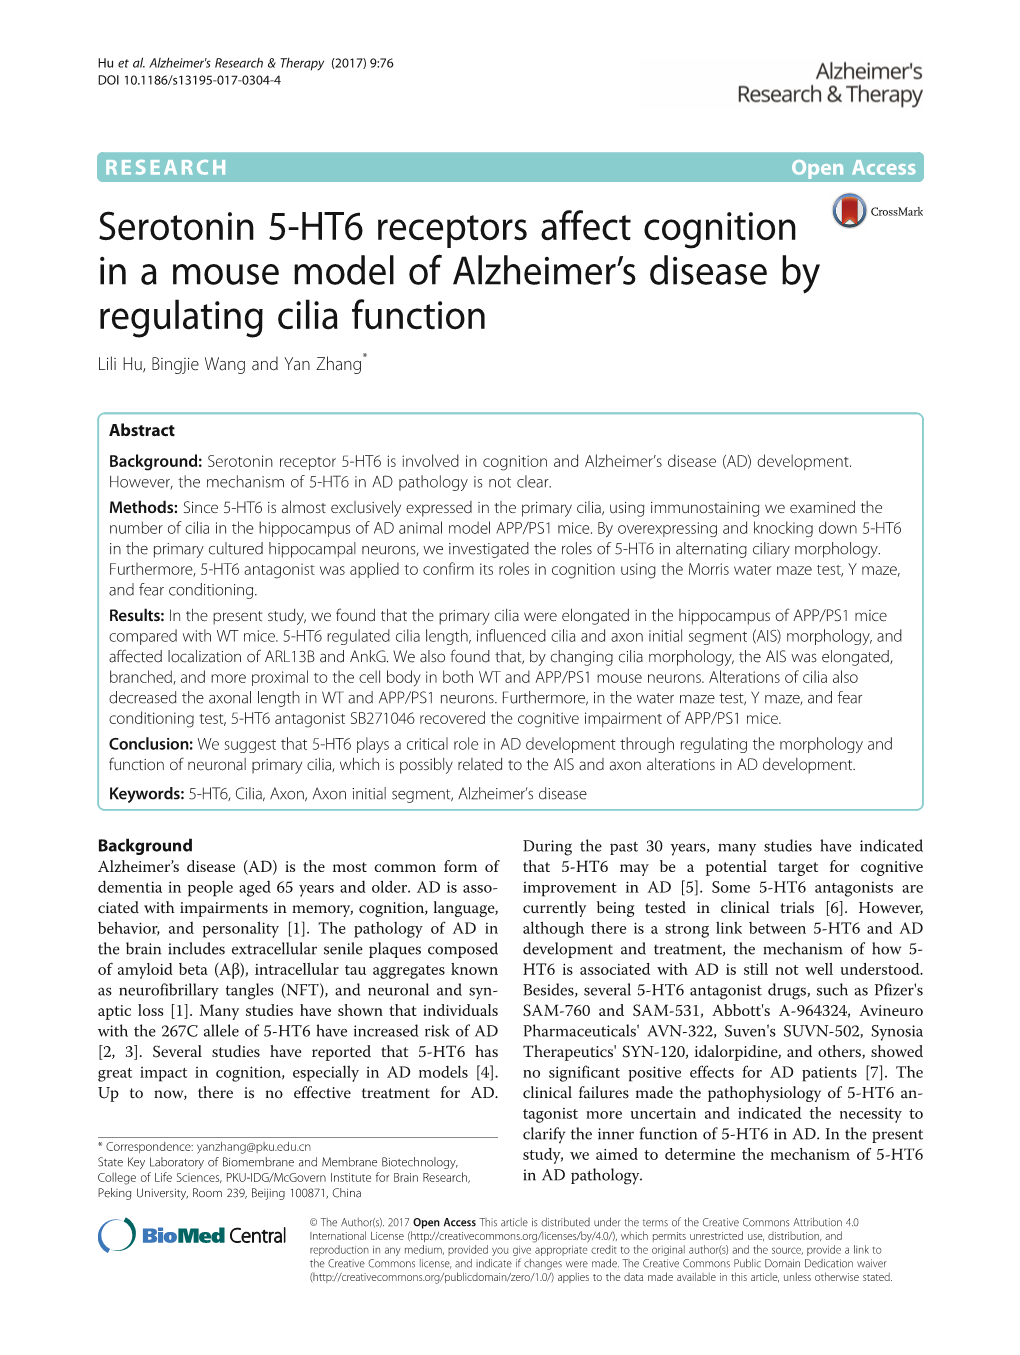 Serotonin 5-HT6 Receptors Affect Cognition in a Mouse Model of Alzheimer’S Disease by Regulating Cilia Function Lili Hu, Bingjie Wang and Yan Zhang*